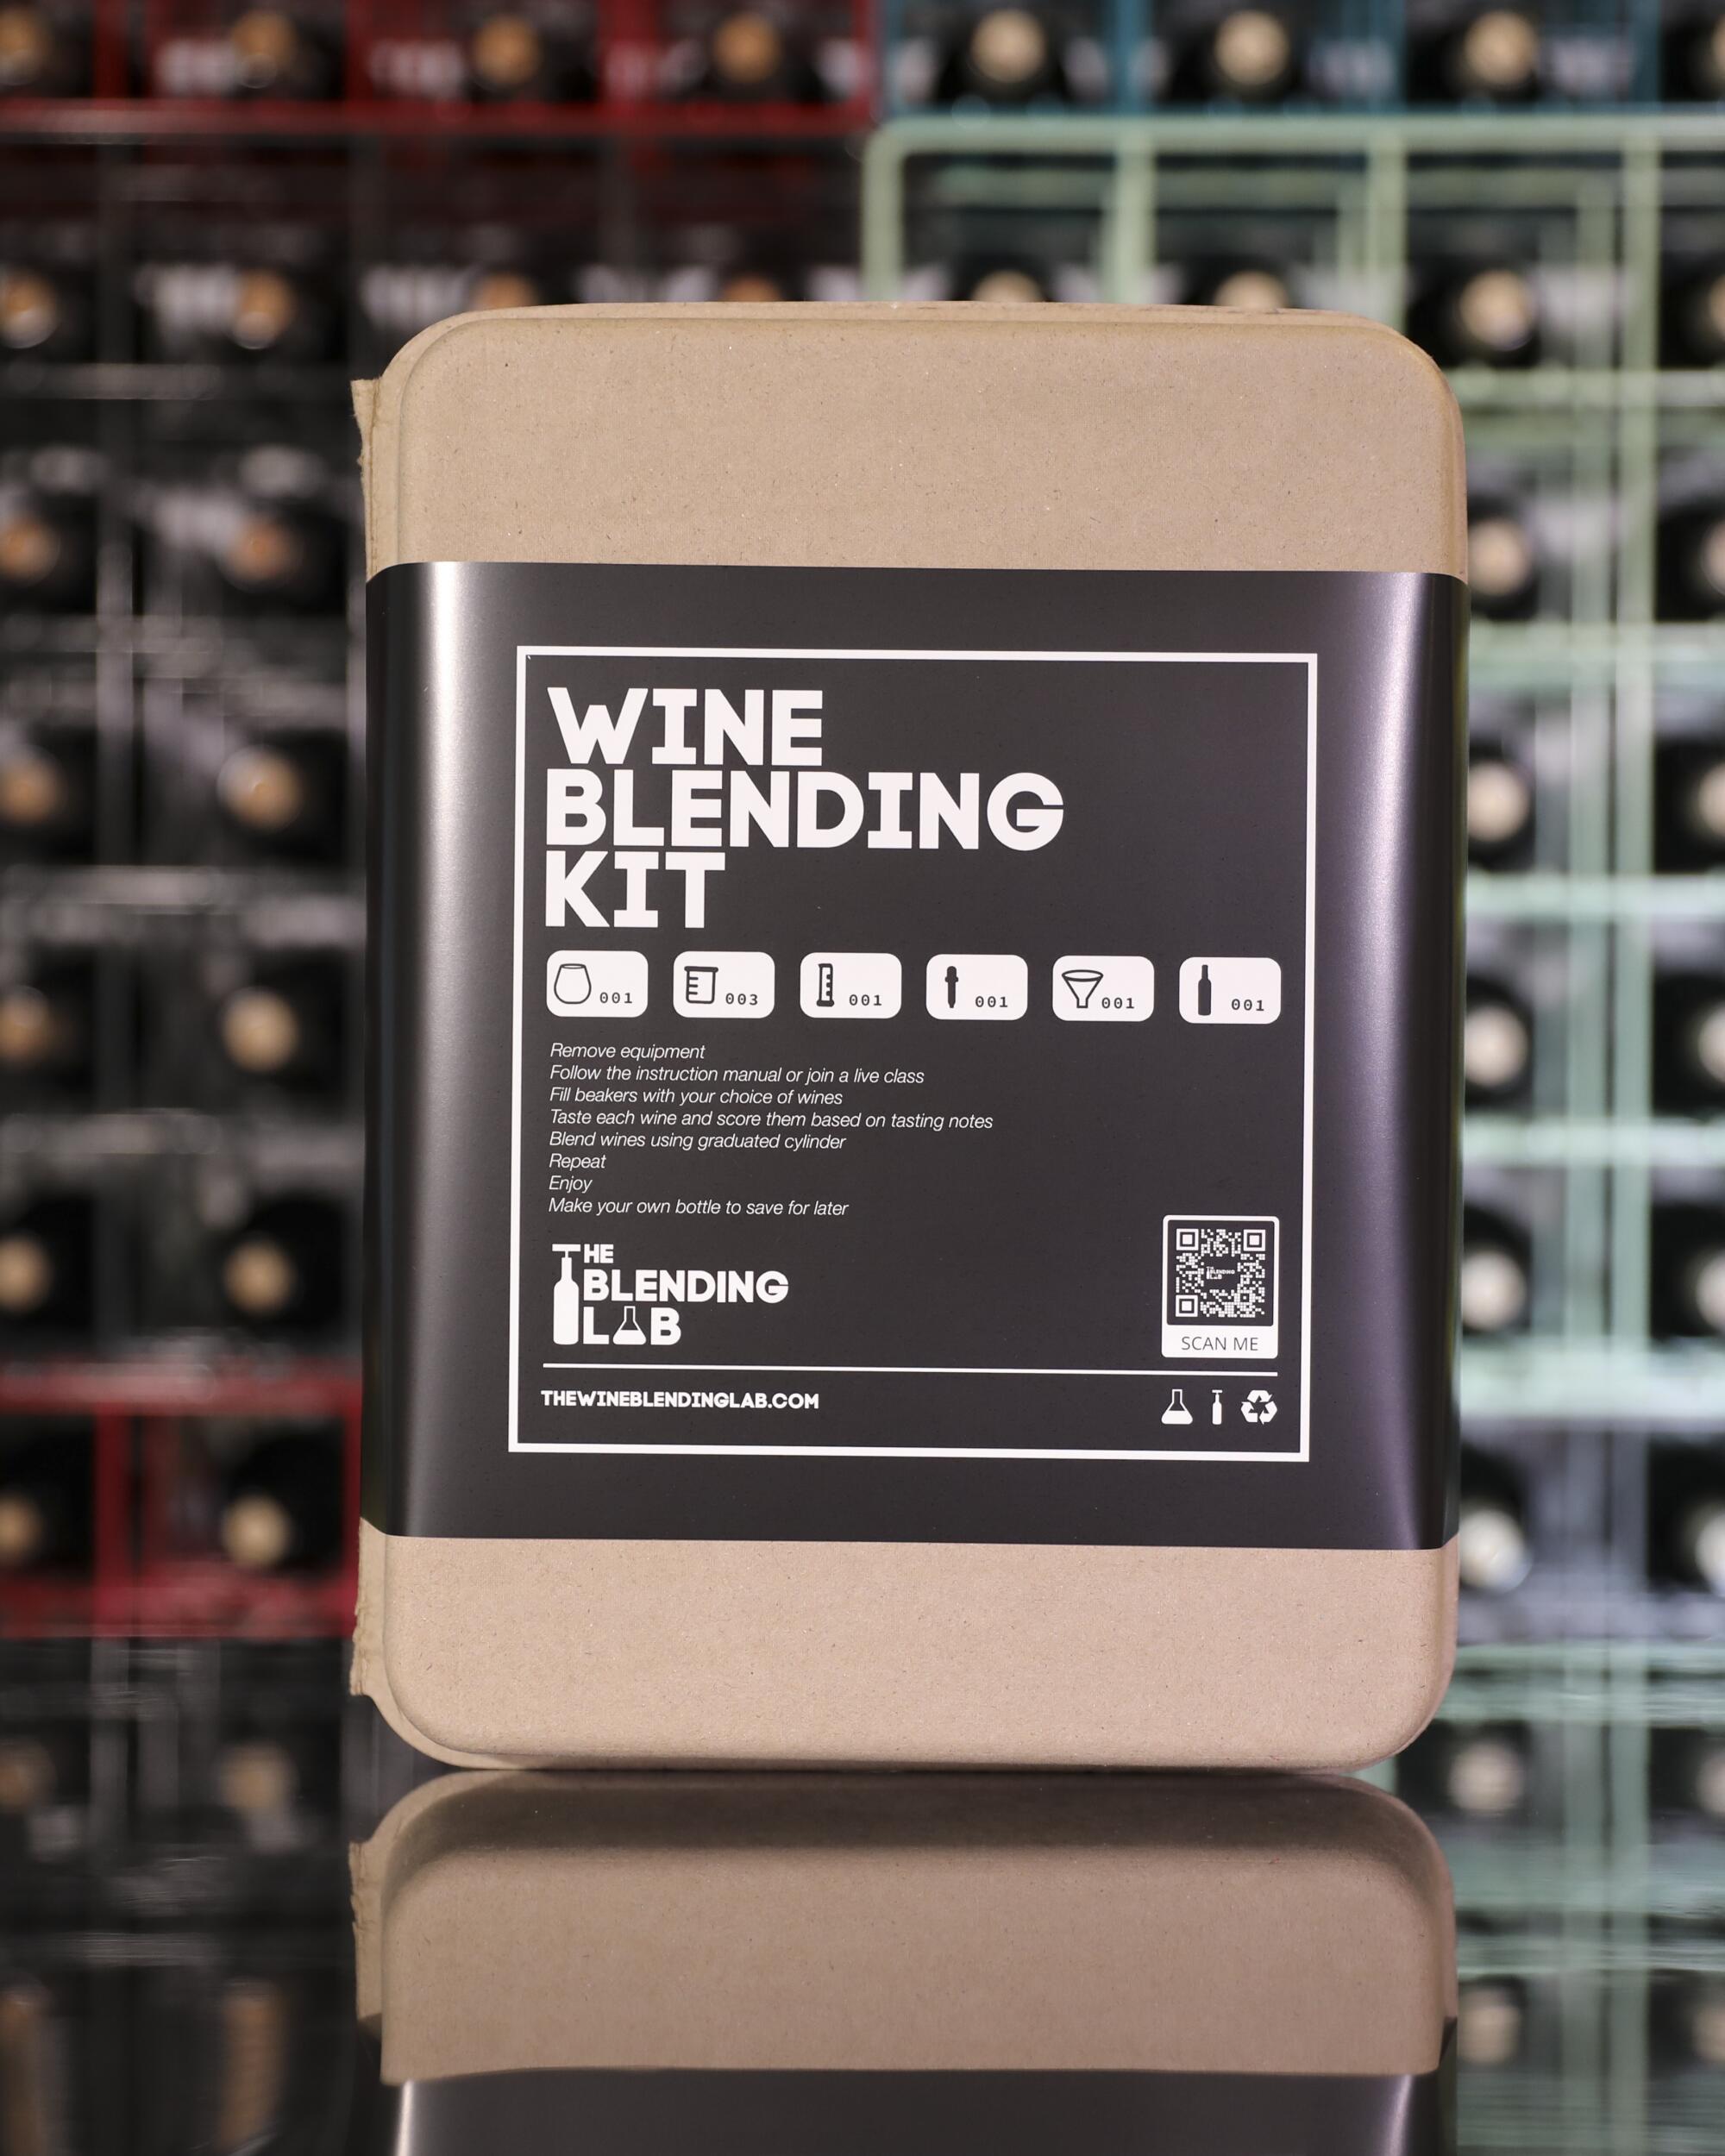 A guided wine blending kit from the Blending Lab 